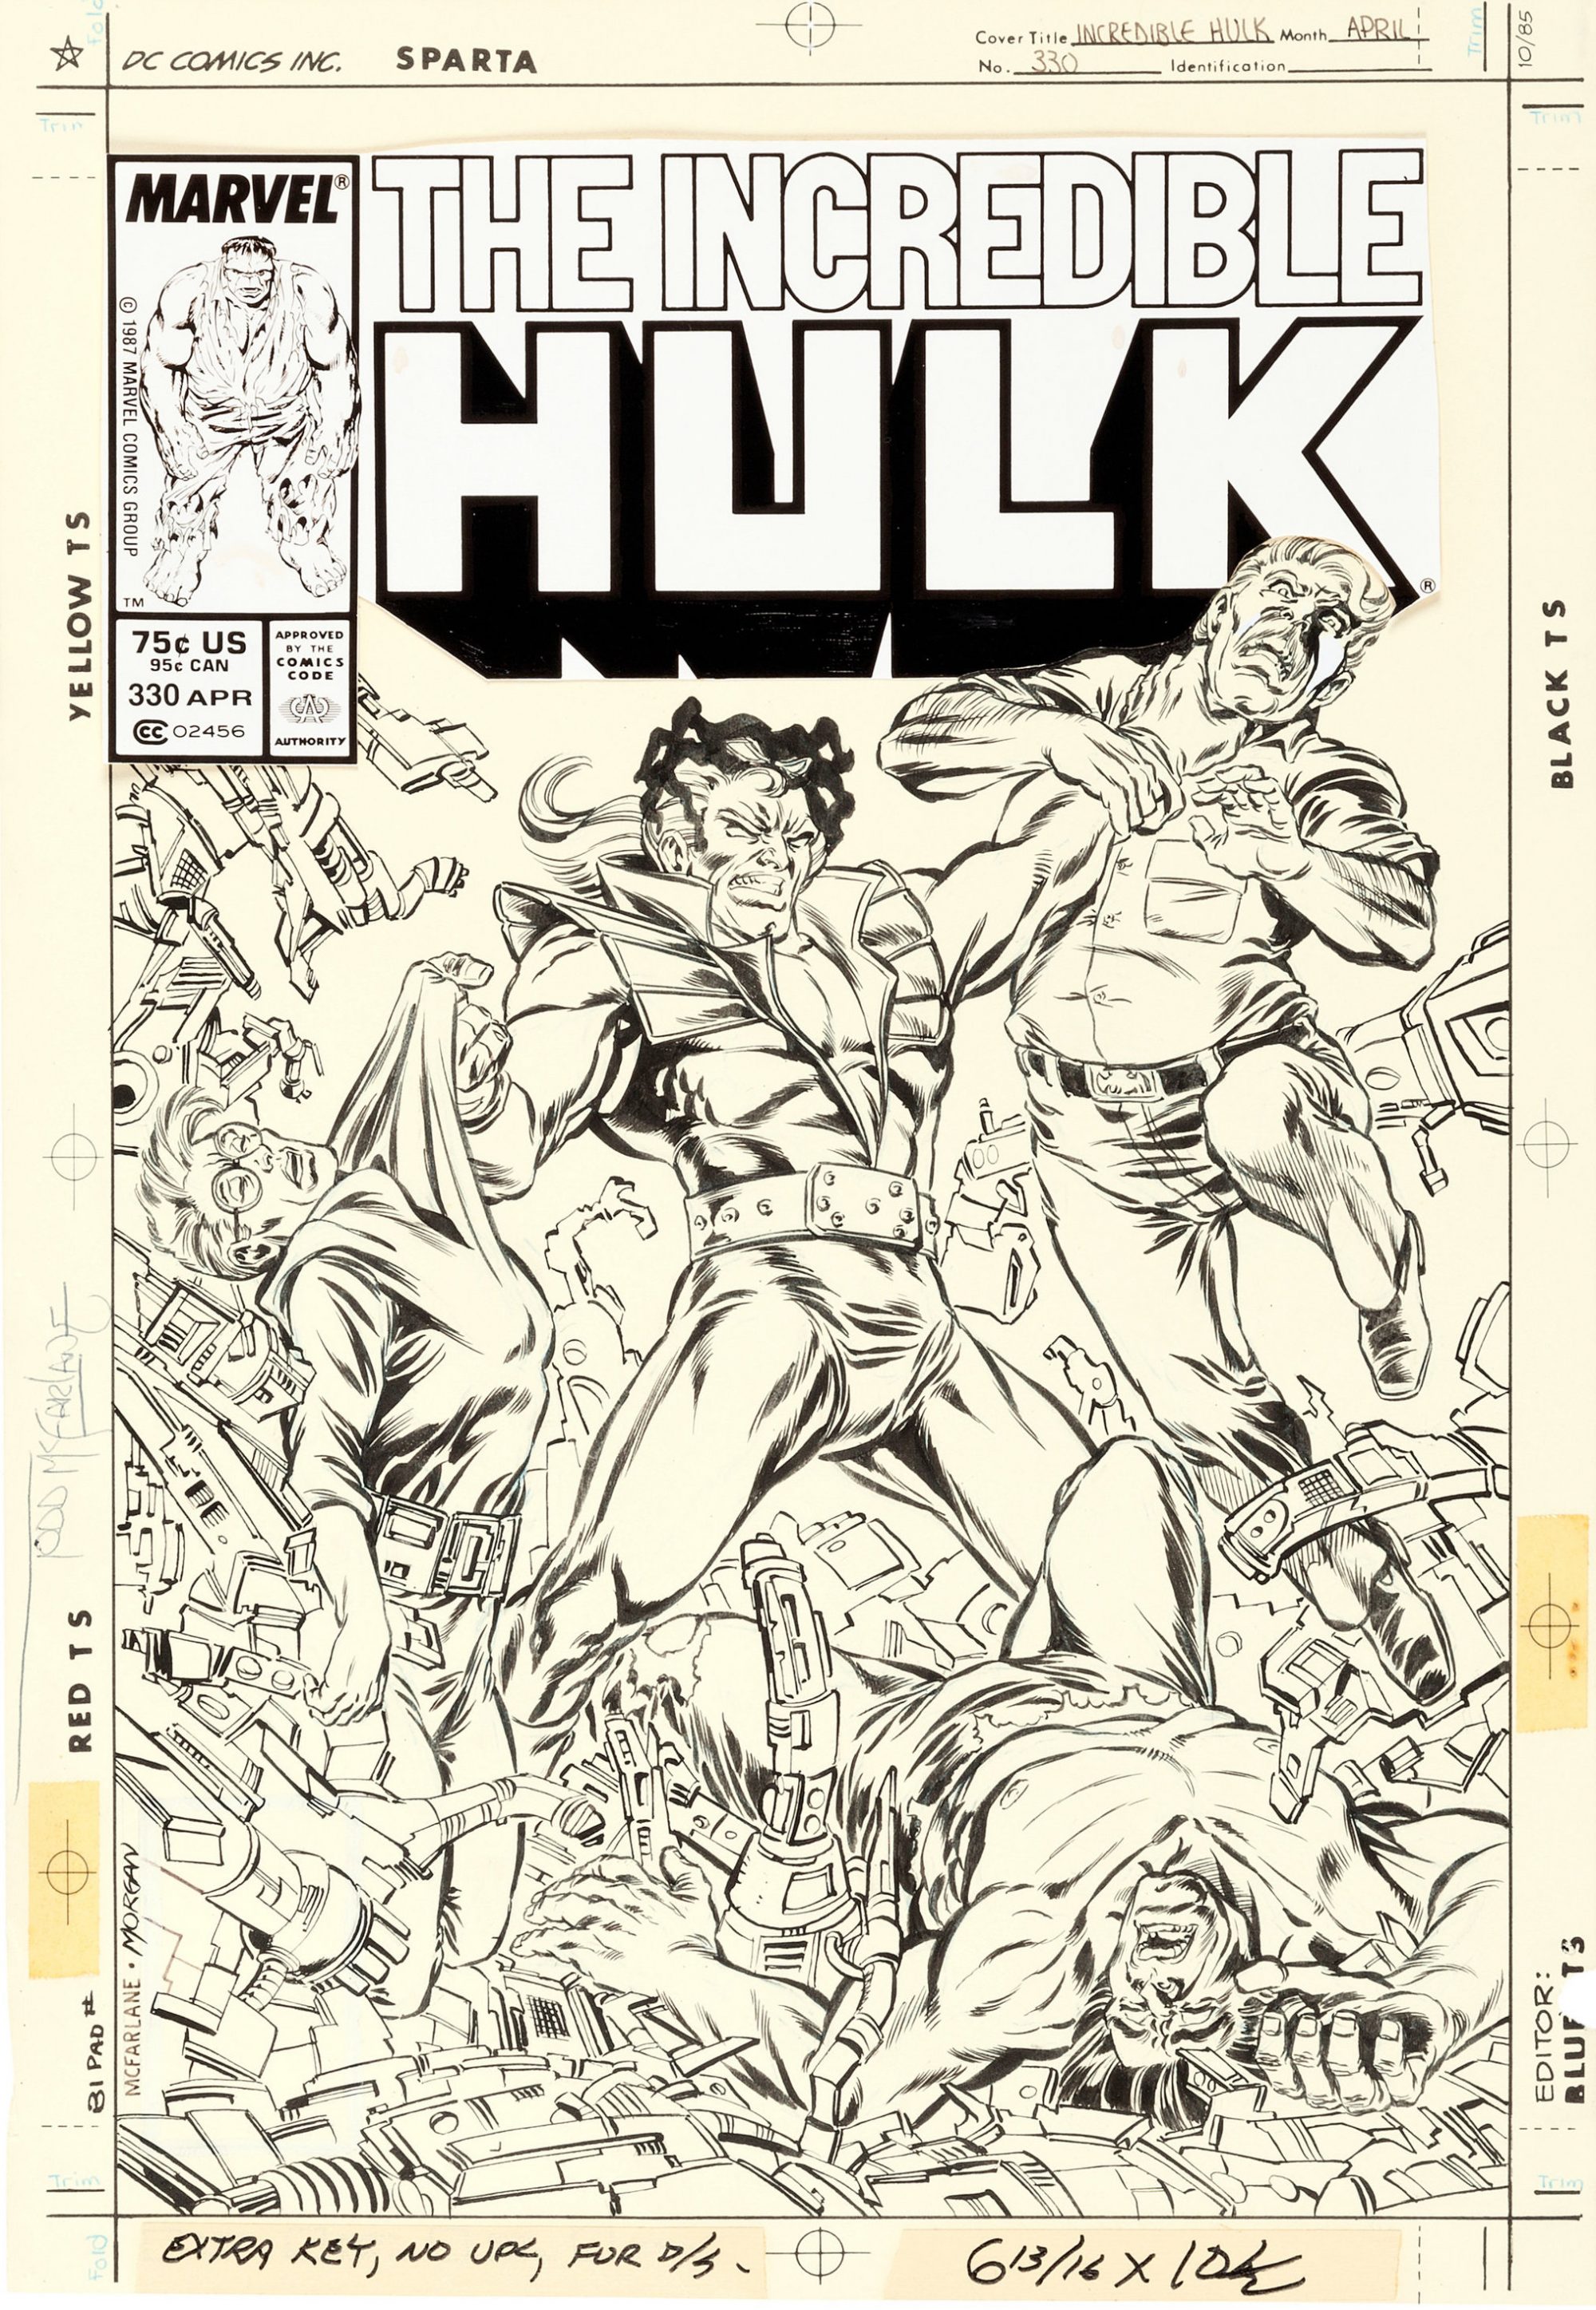 Todd McFarlane and Tom Morgan Incredible Hulk #330 Cover